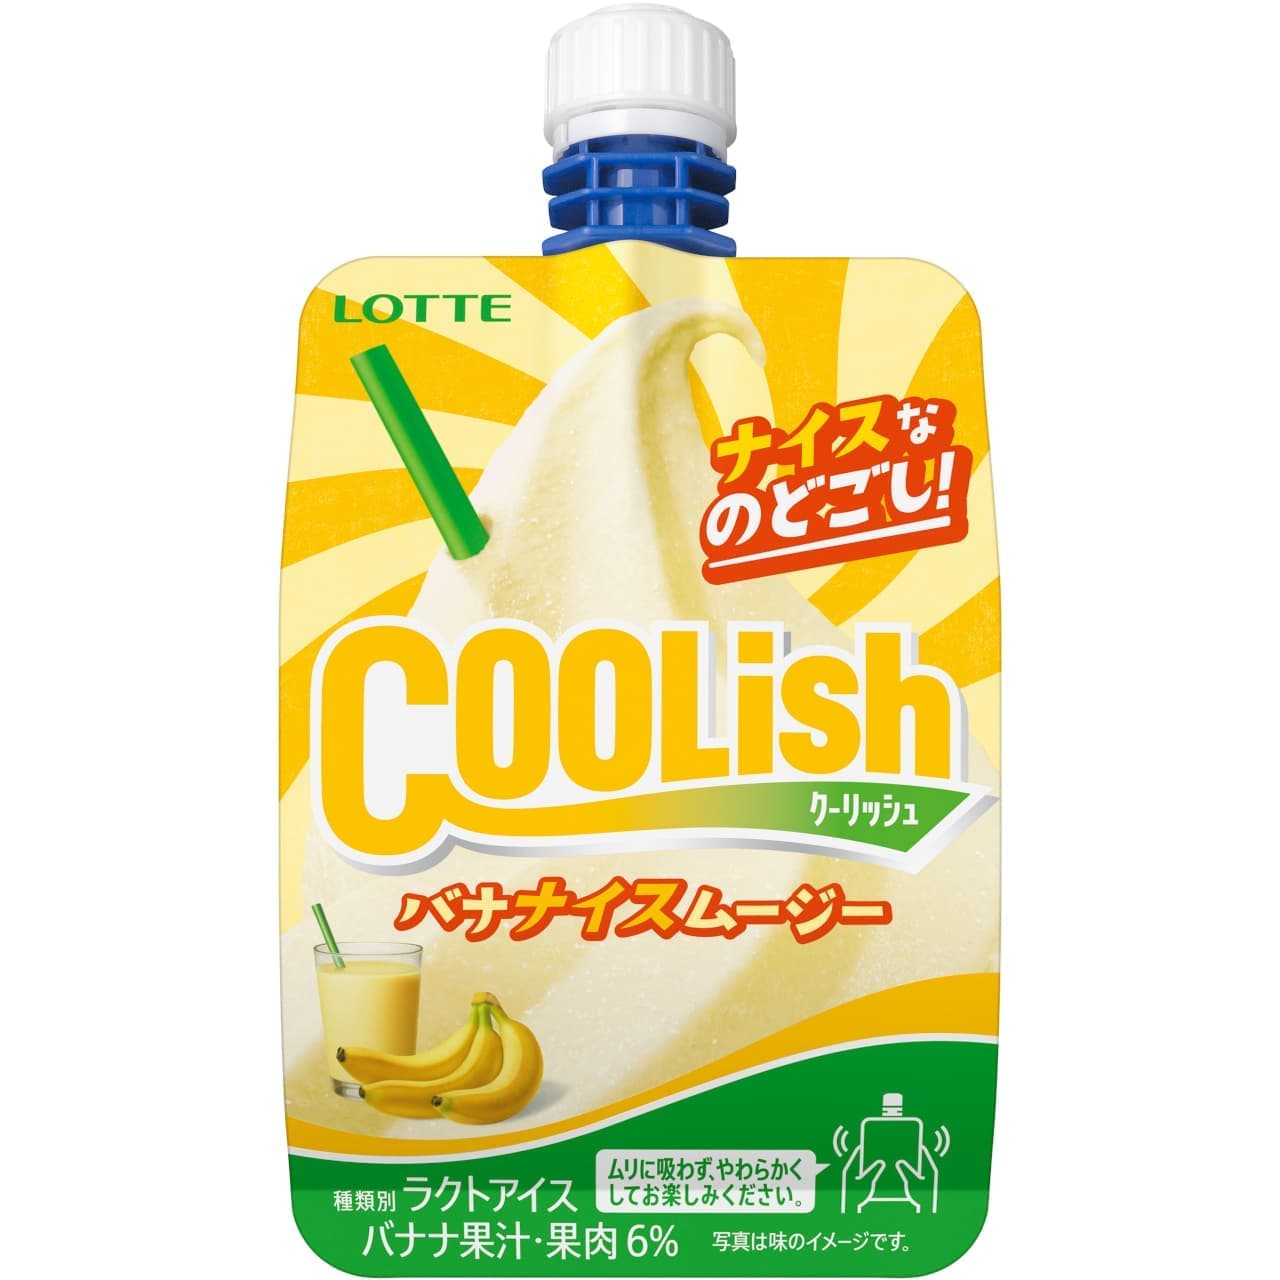 Lotte "Coolish Banana Ice Smoothie